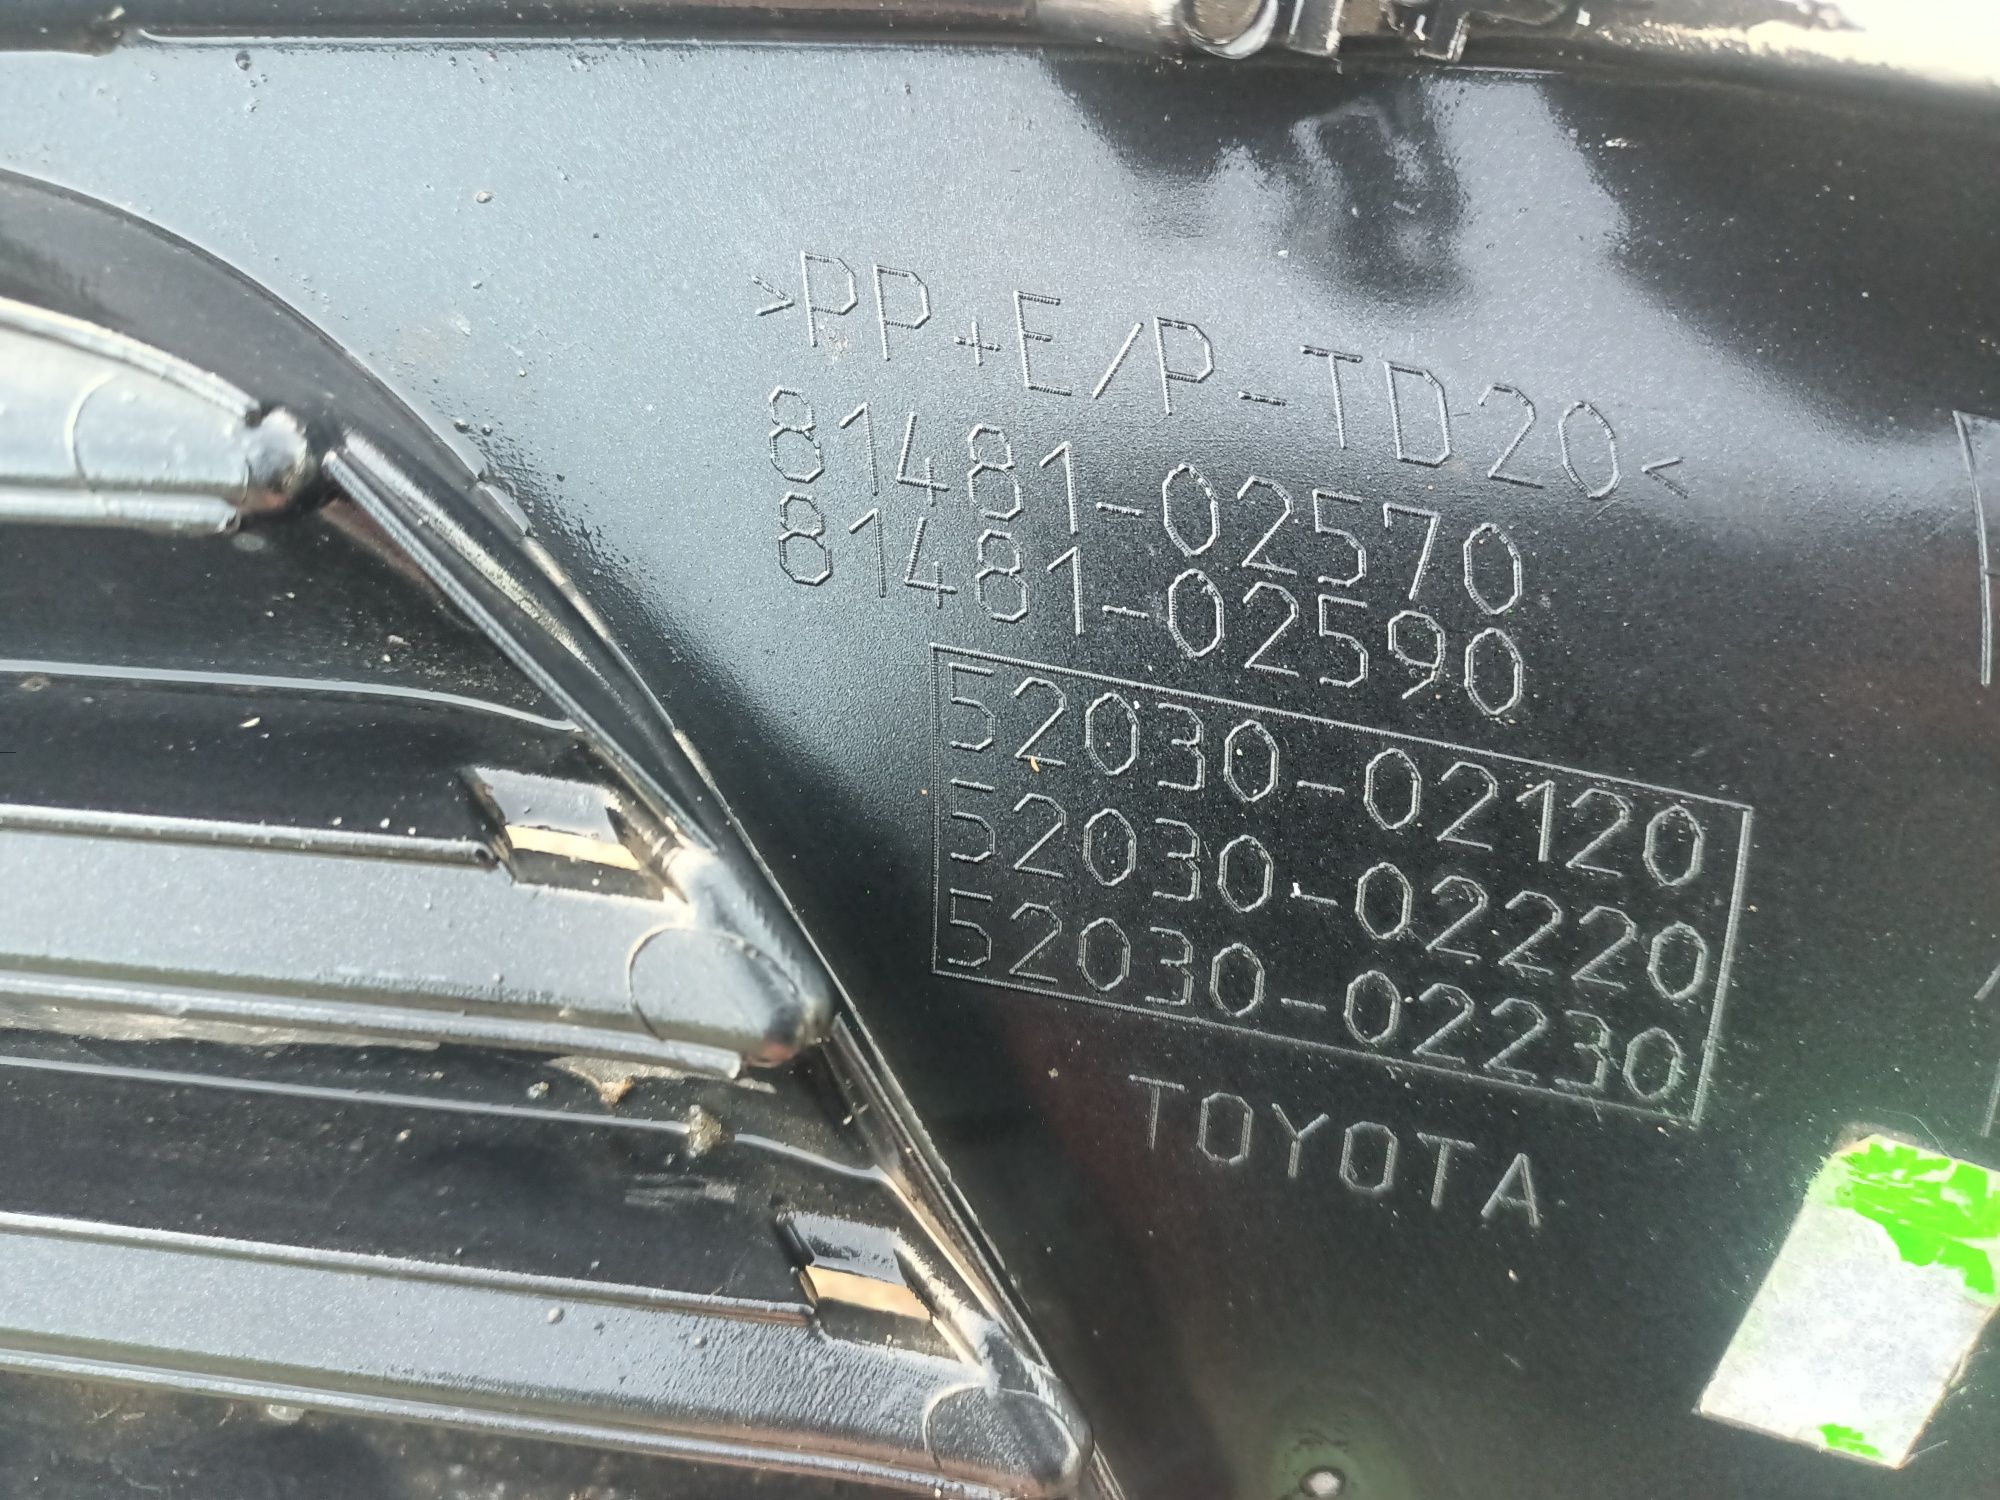 Grila Proiector Toyota Auris dreapata